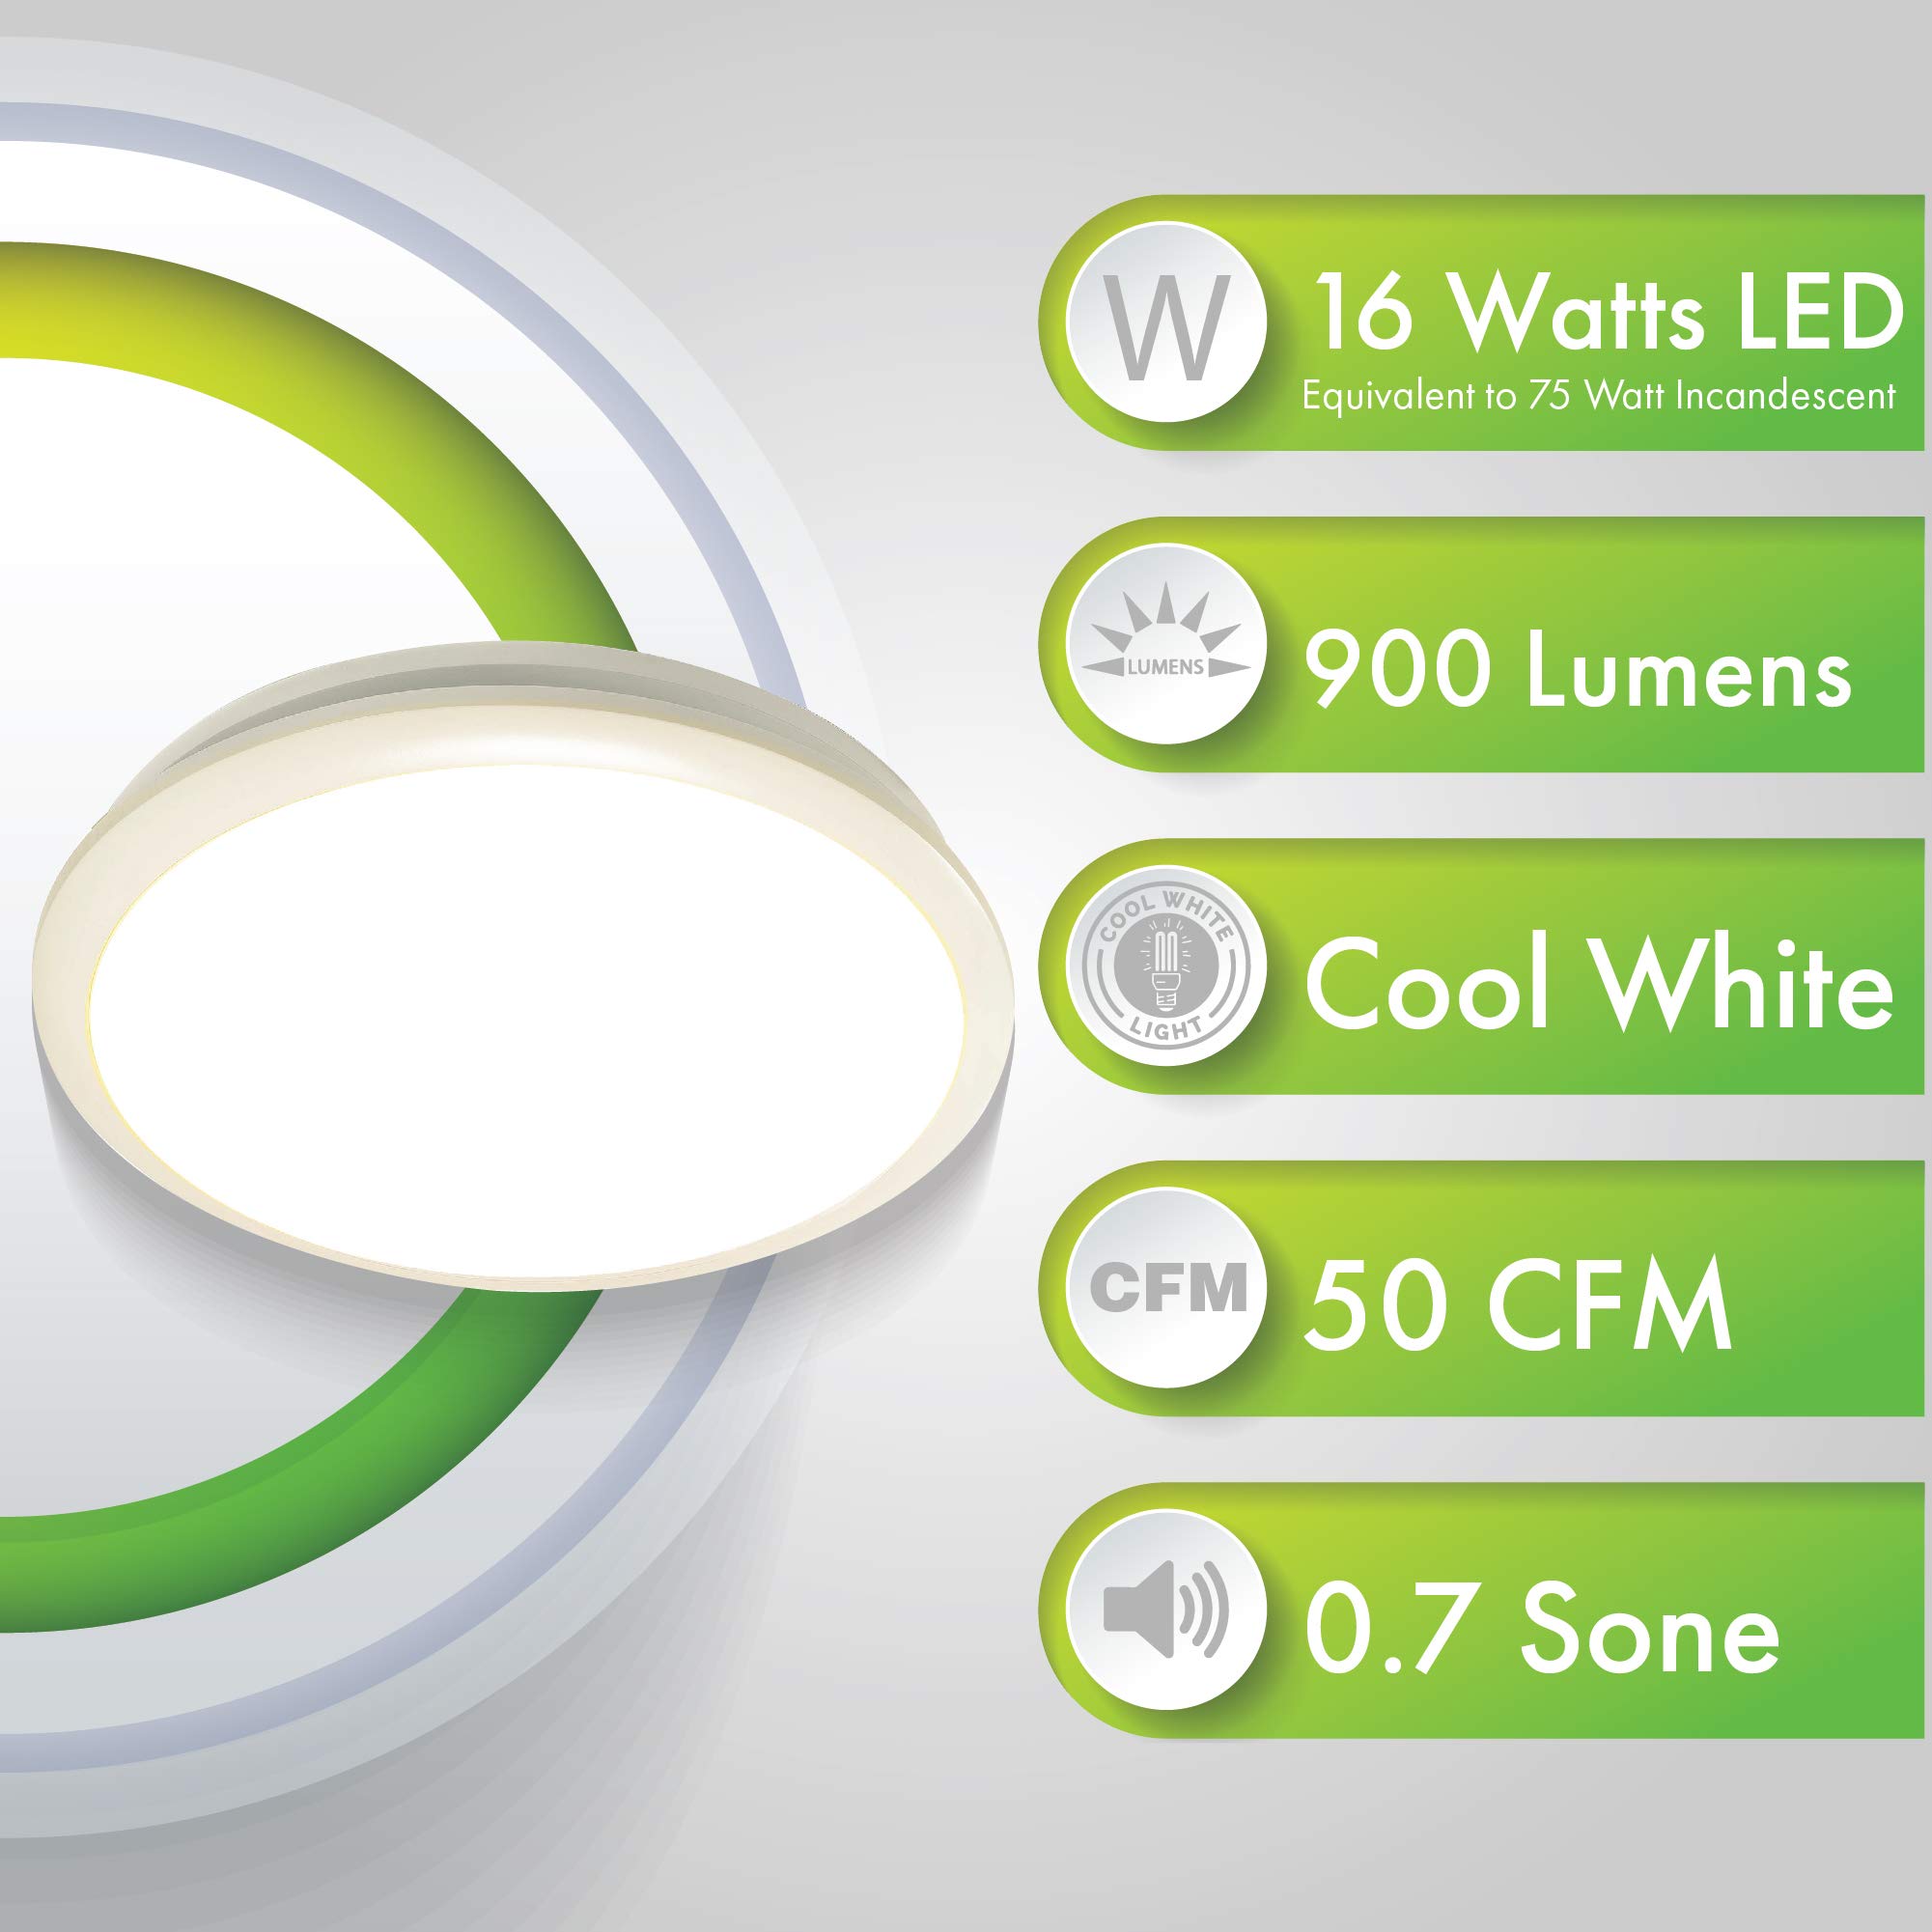 Homewerks 7141-50 Bathroom Fan Integrated LED Light Ceiling Mount Exhaust Ventilation 0.7 Sones 50 CFM, White